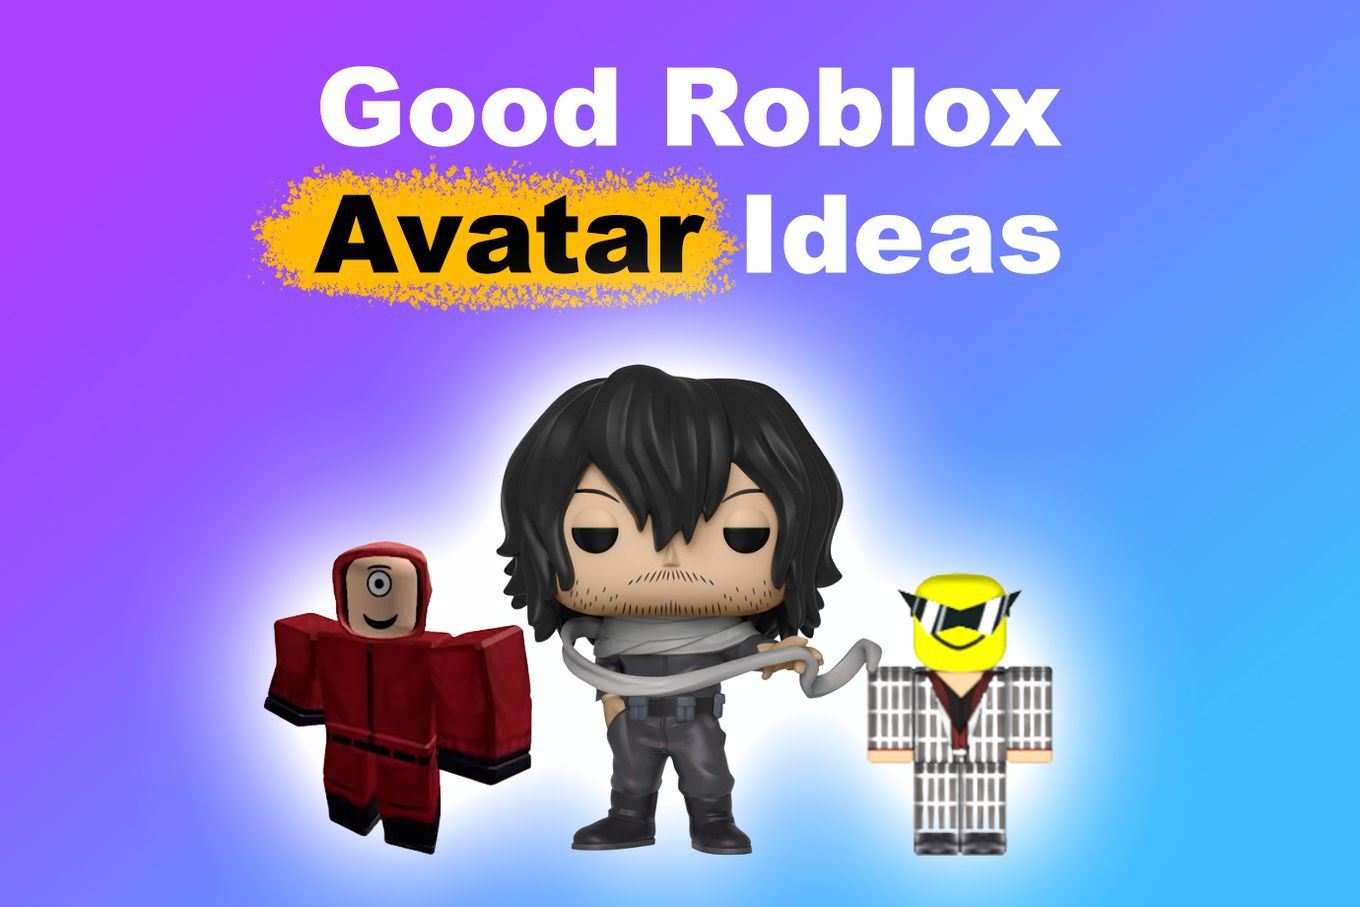 15 Cool Roblox Avatar Ideas This 2023 [You'll Love To Use] - Alvaro Trigo's  Blog